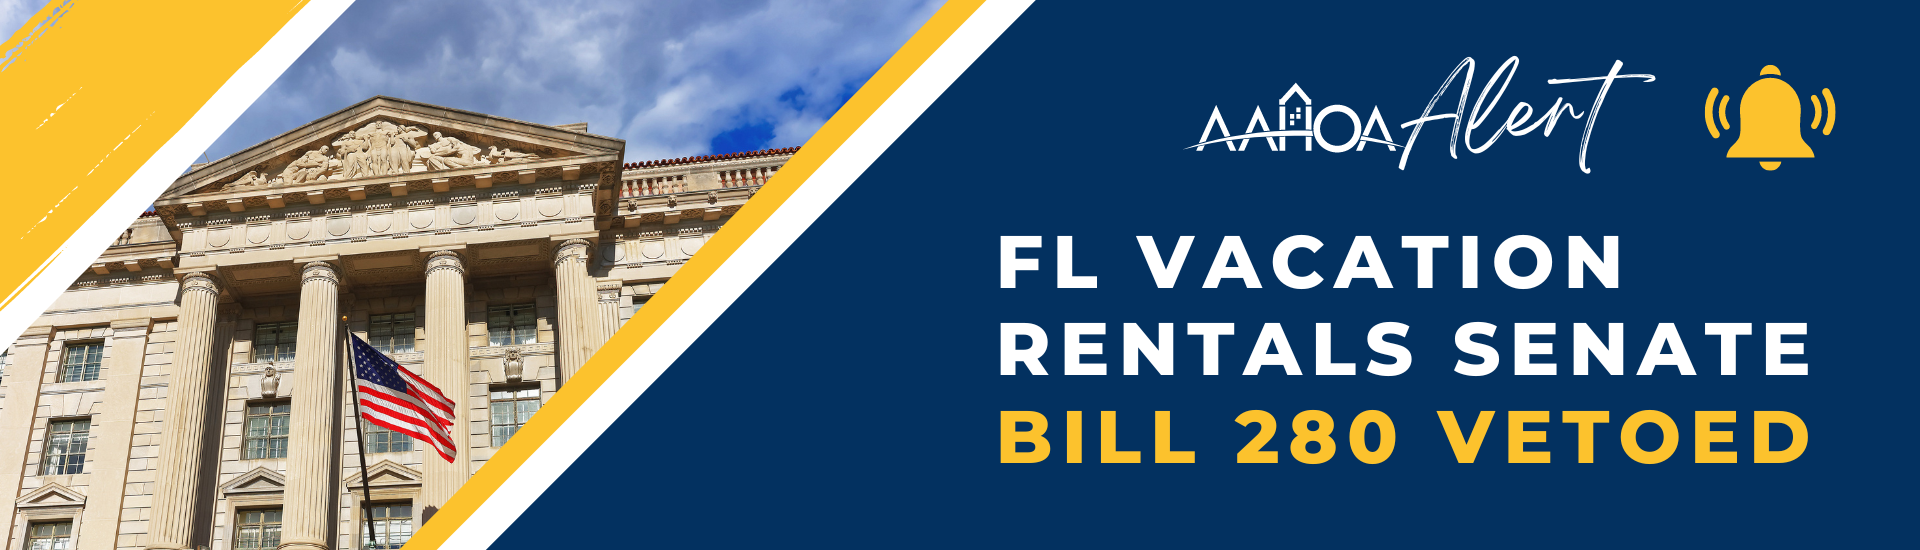 Florida Update: Vacation Rentals Senate Bill 280 VETOED